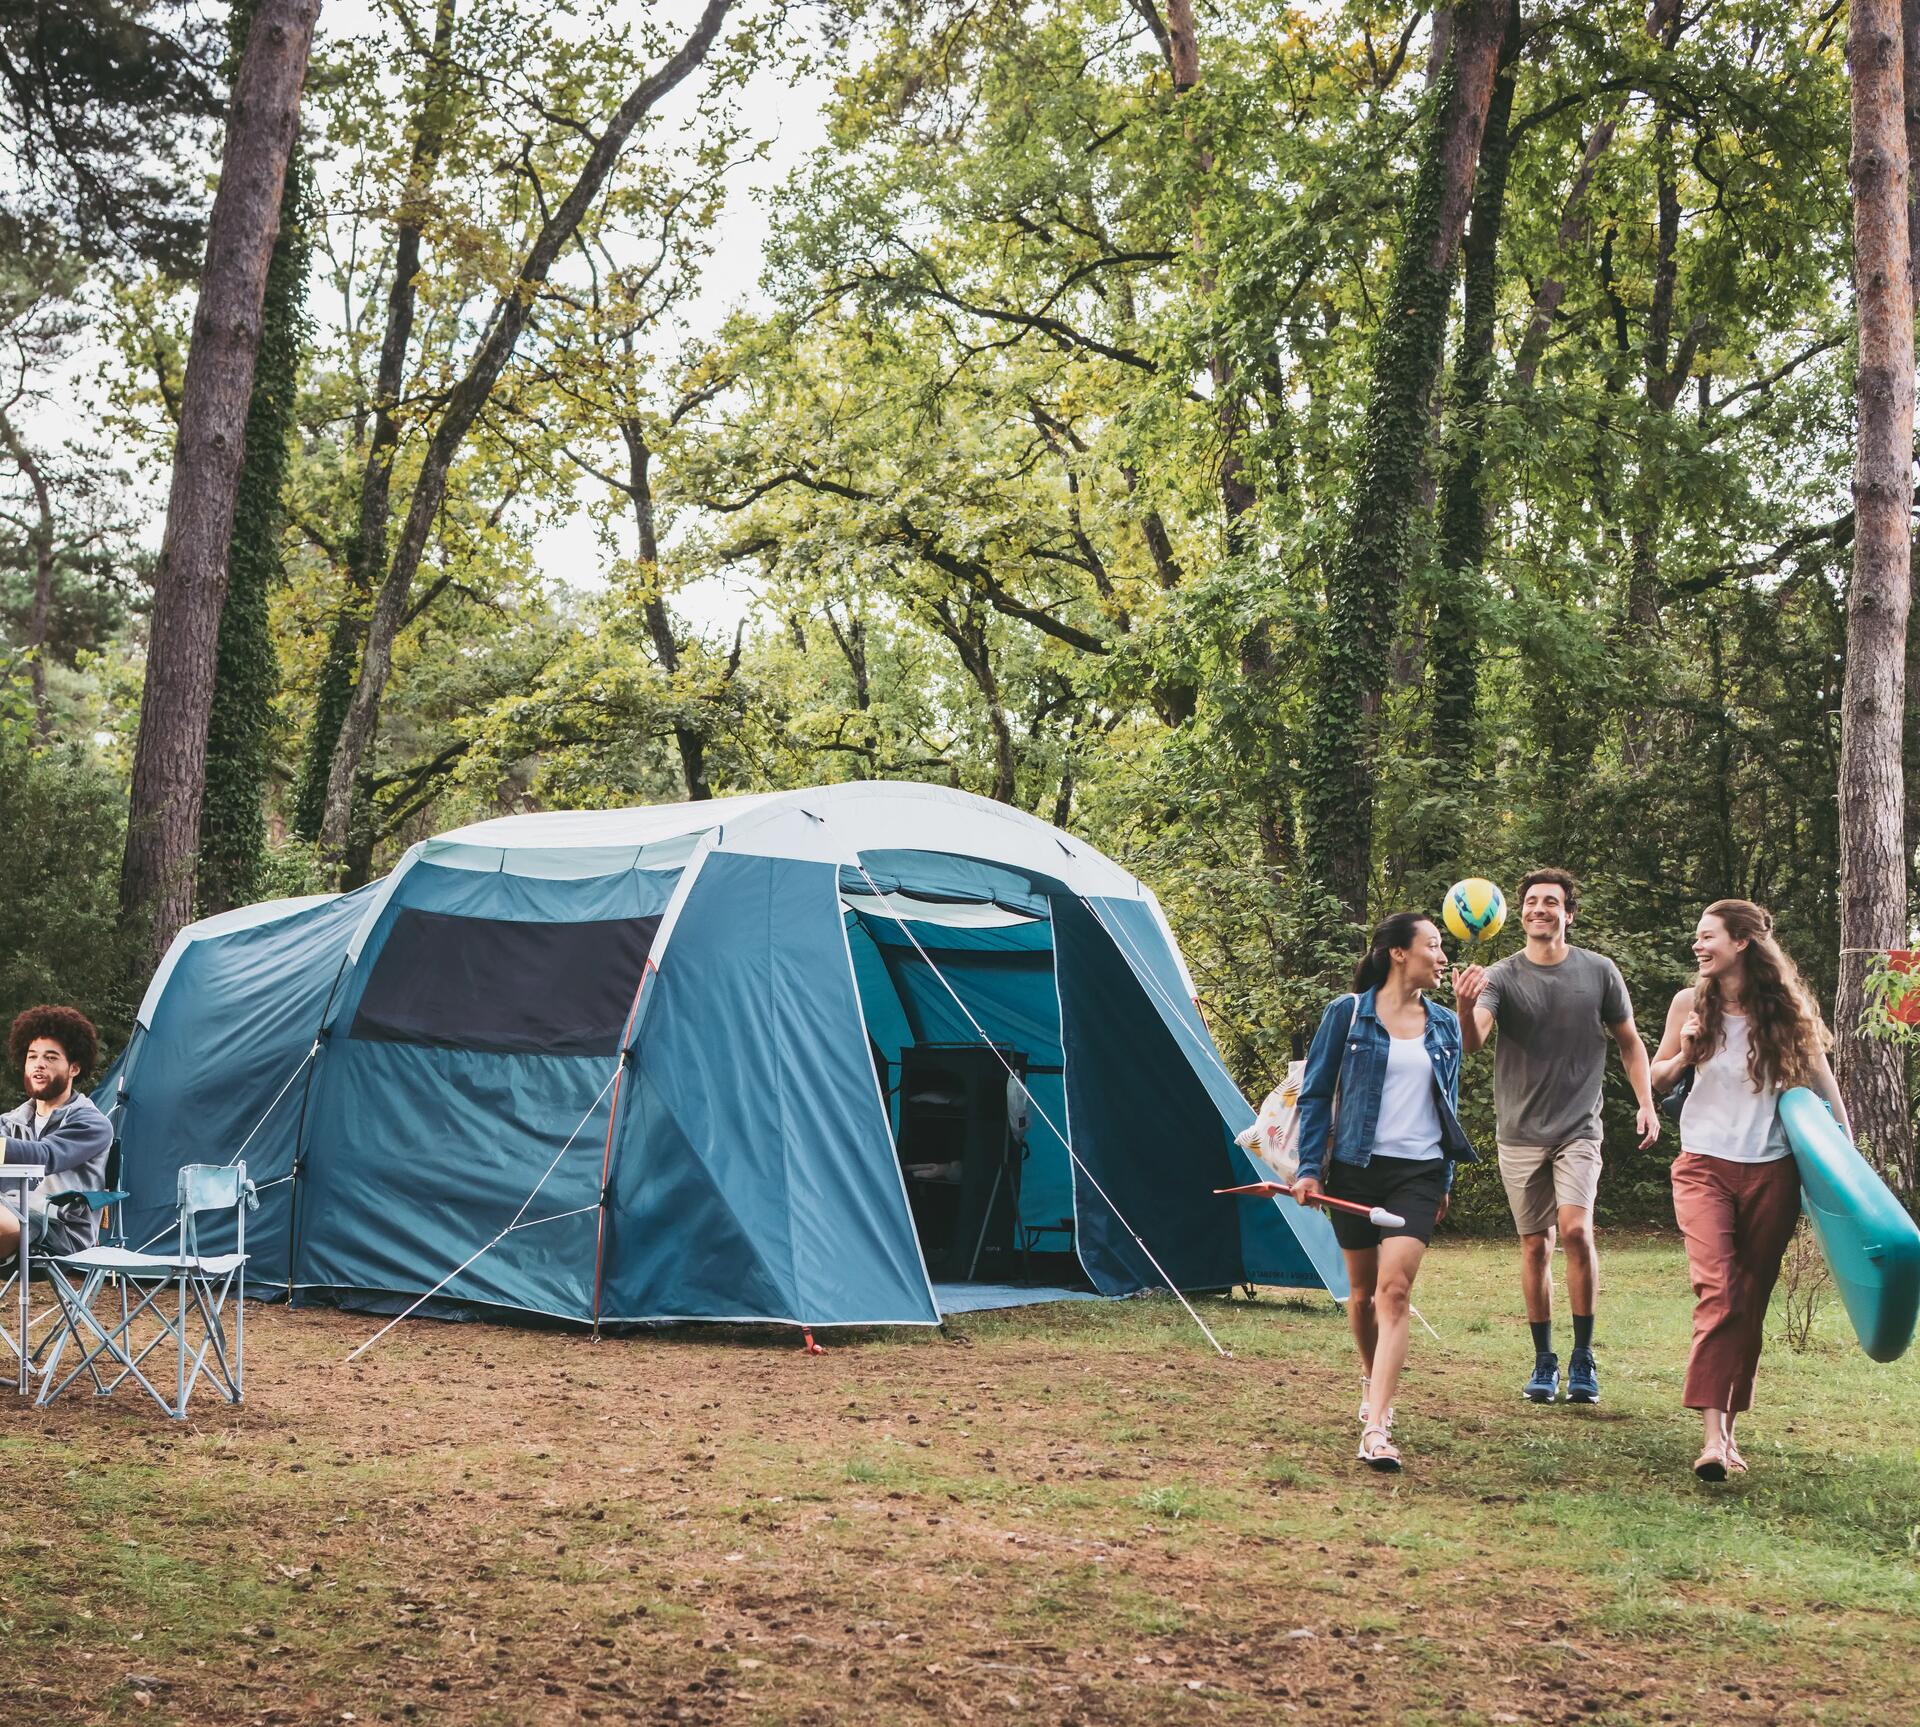 comment-choisir-tente-camping-trekking-8-personnes-famille-grandes-tentes